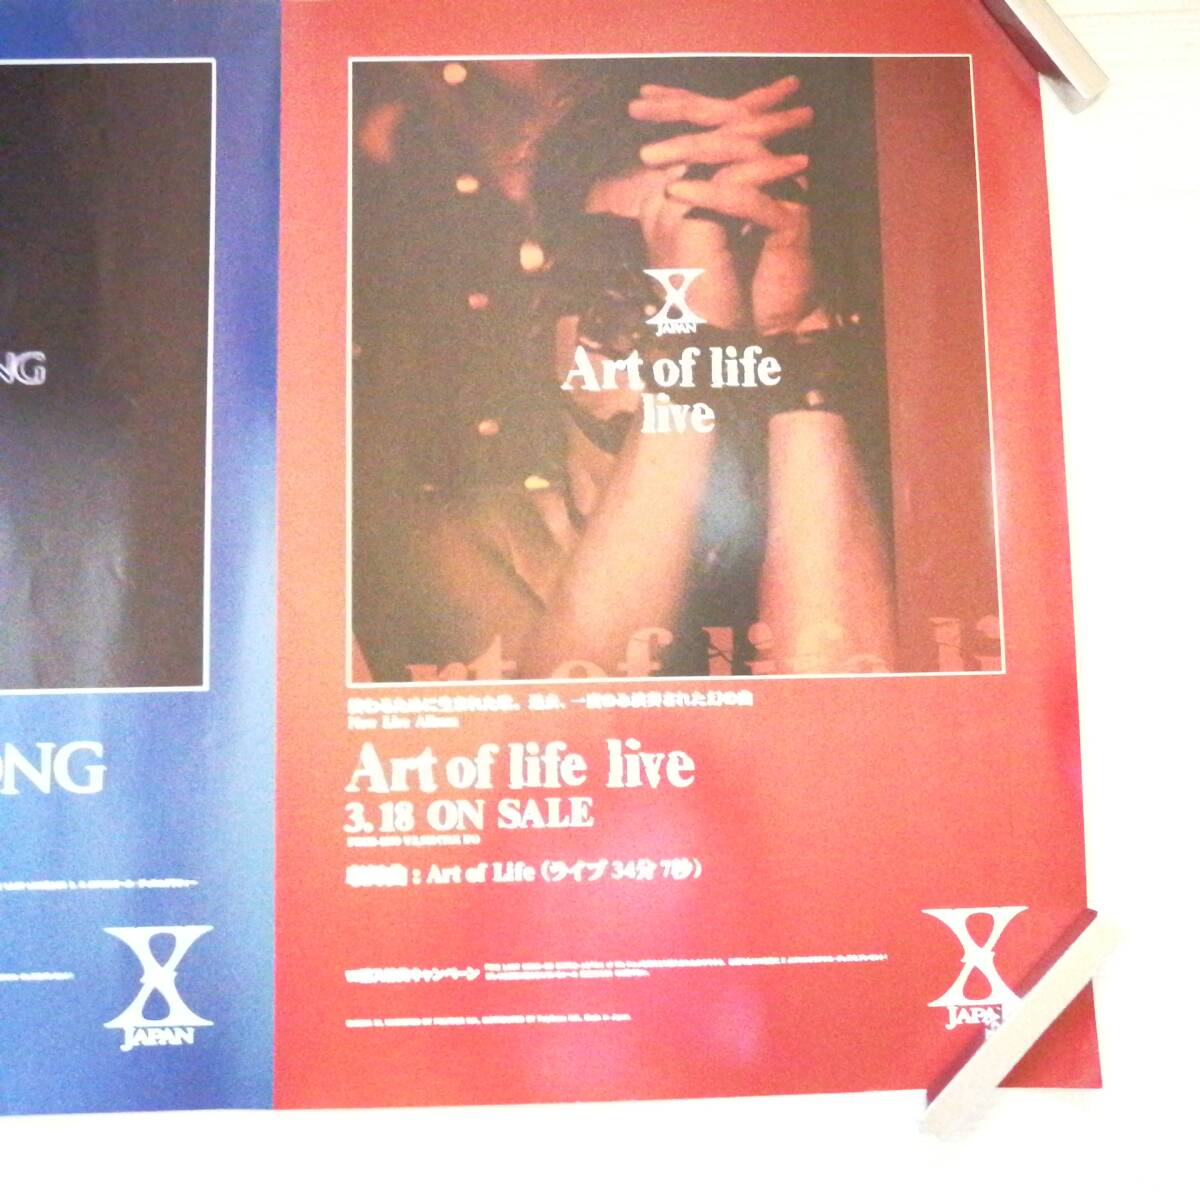 X JAPAN V⑬ 発売告知 ポスター THE LAST SONG・Art of life live グッズ hide yoshiki_画像3